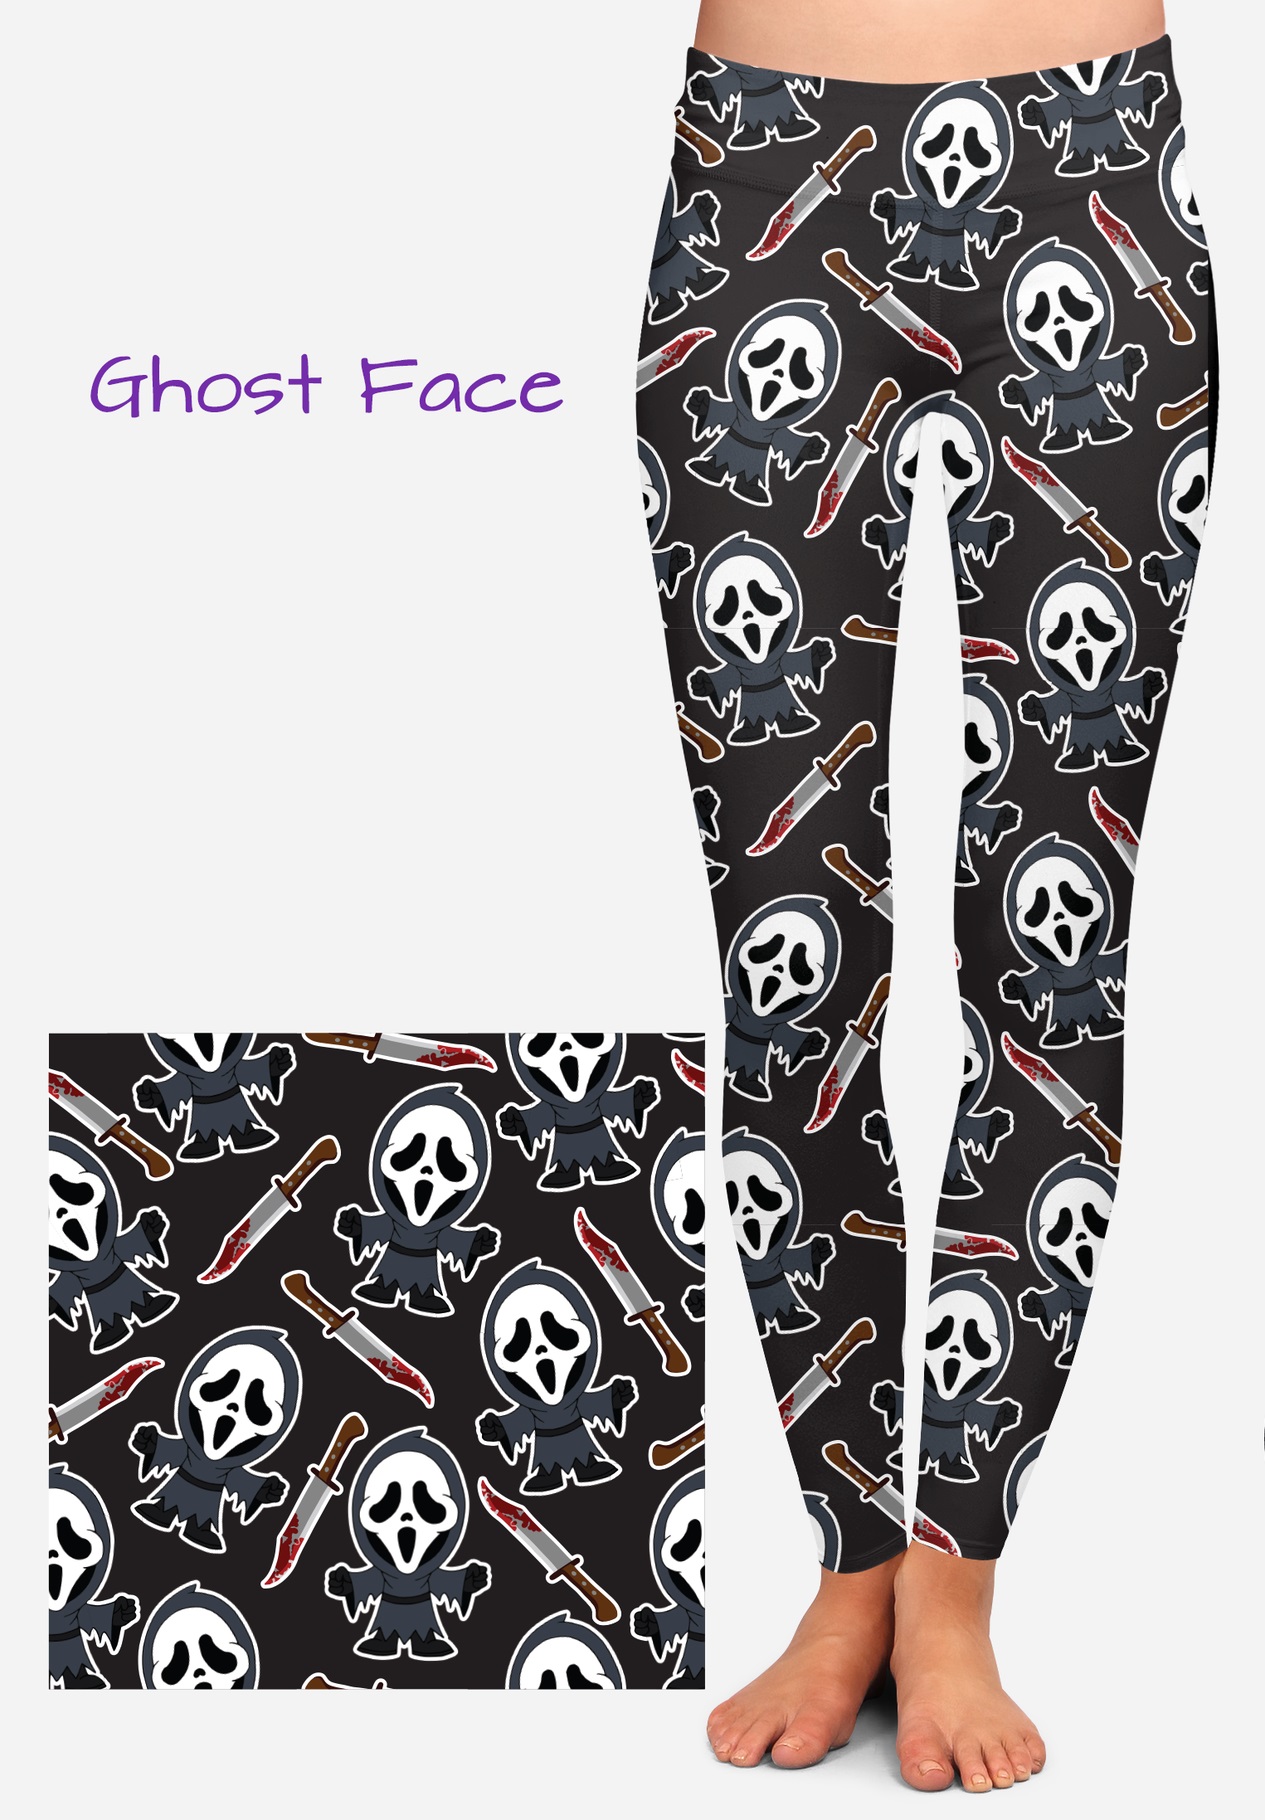 Ghost Face Scream Leggings - Screamers Costumes